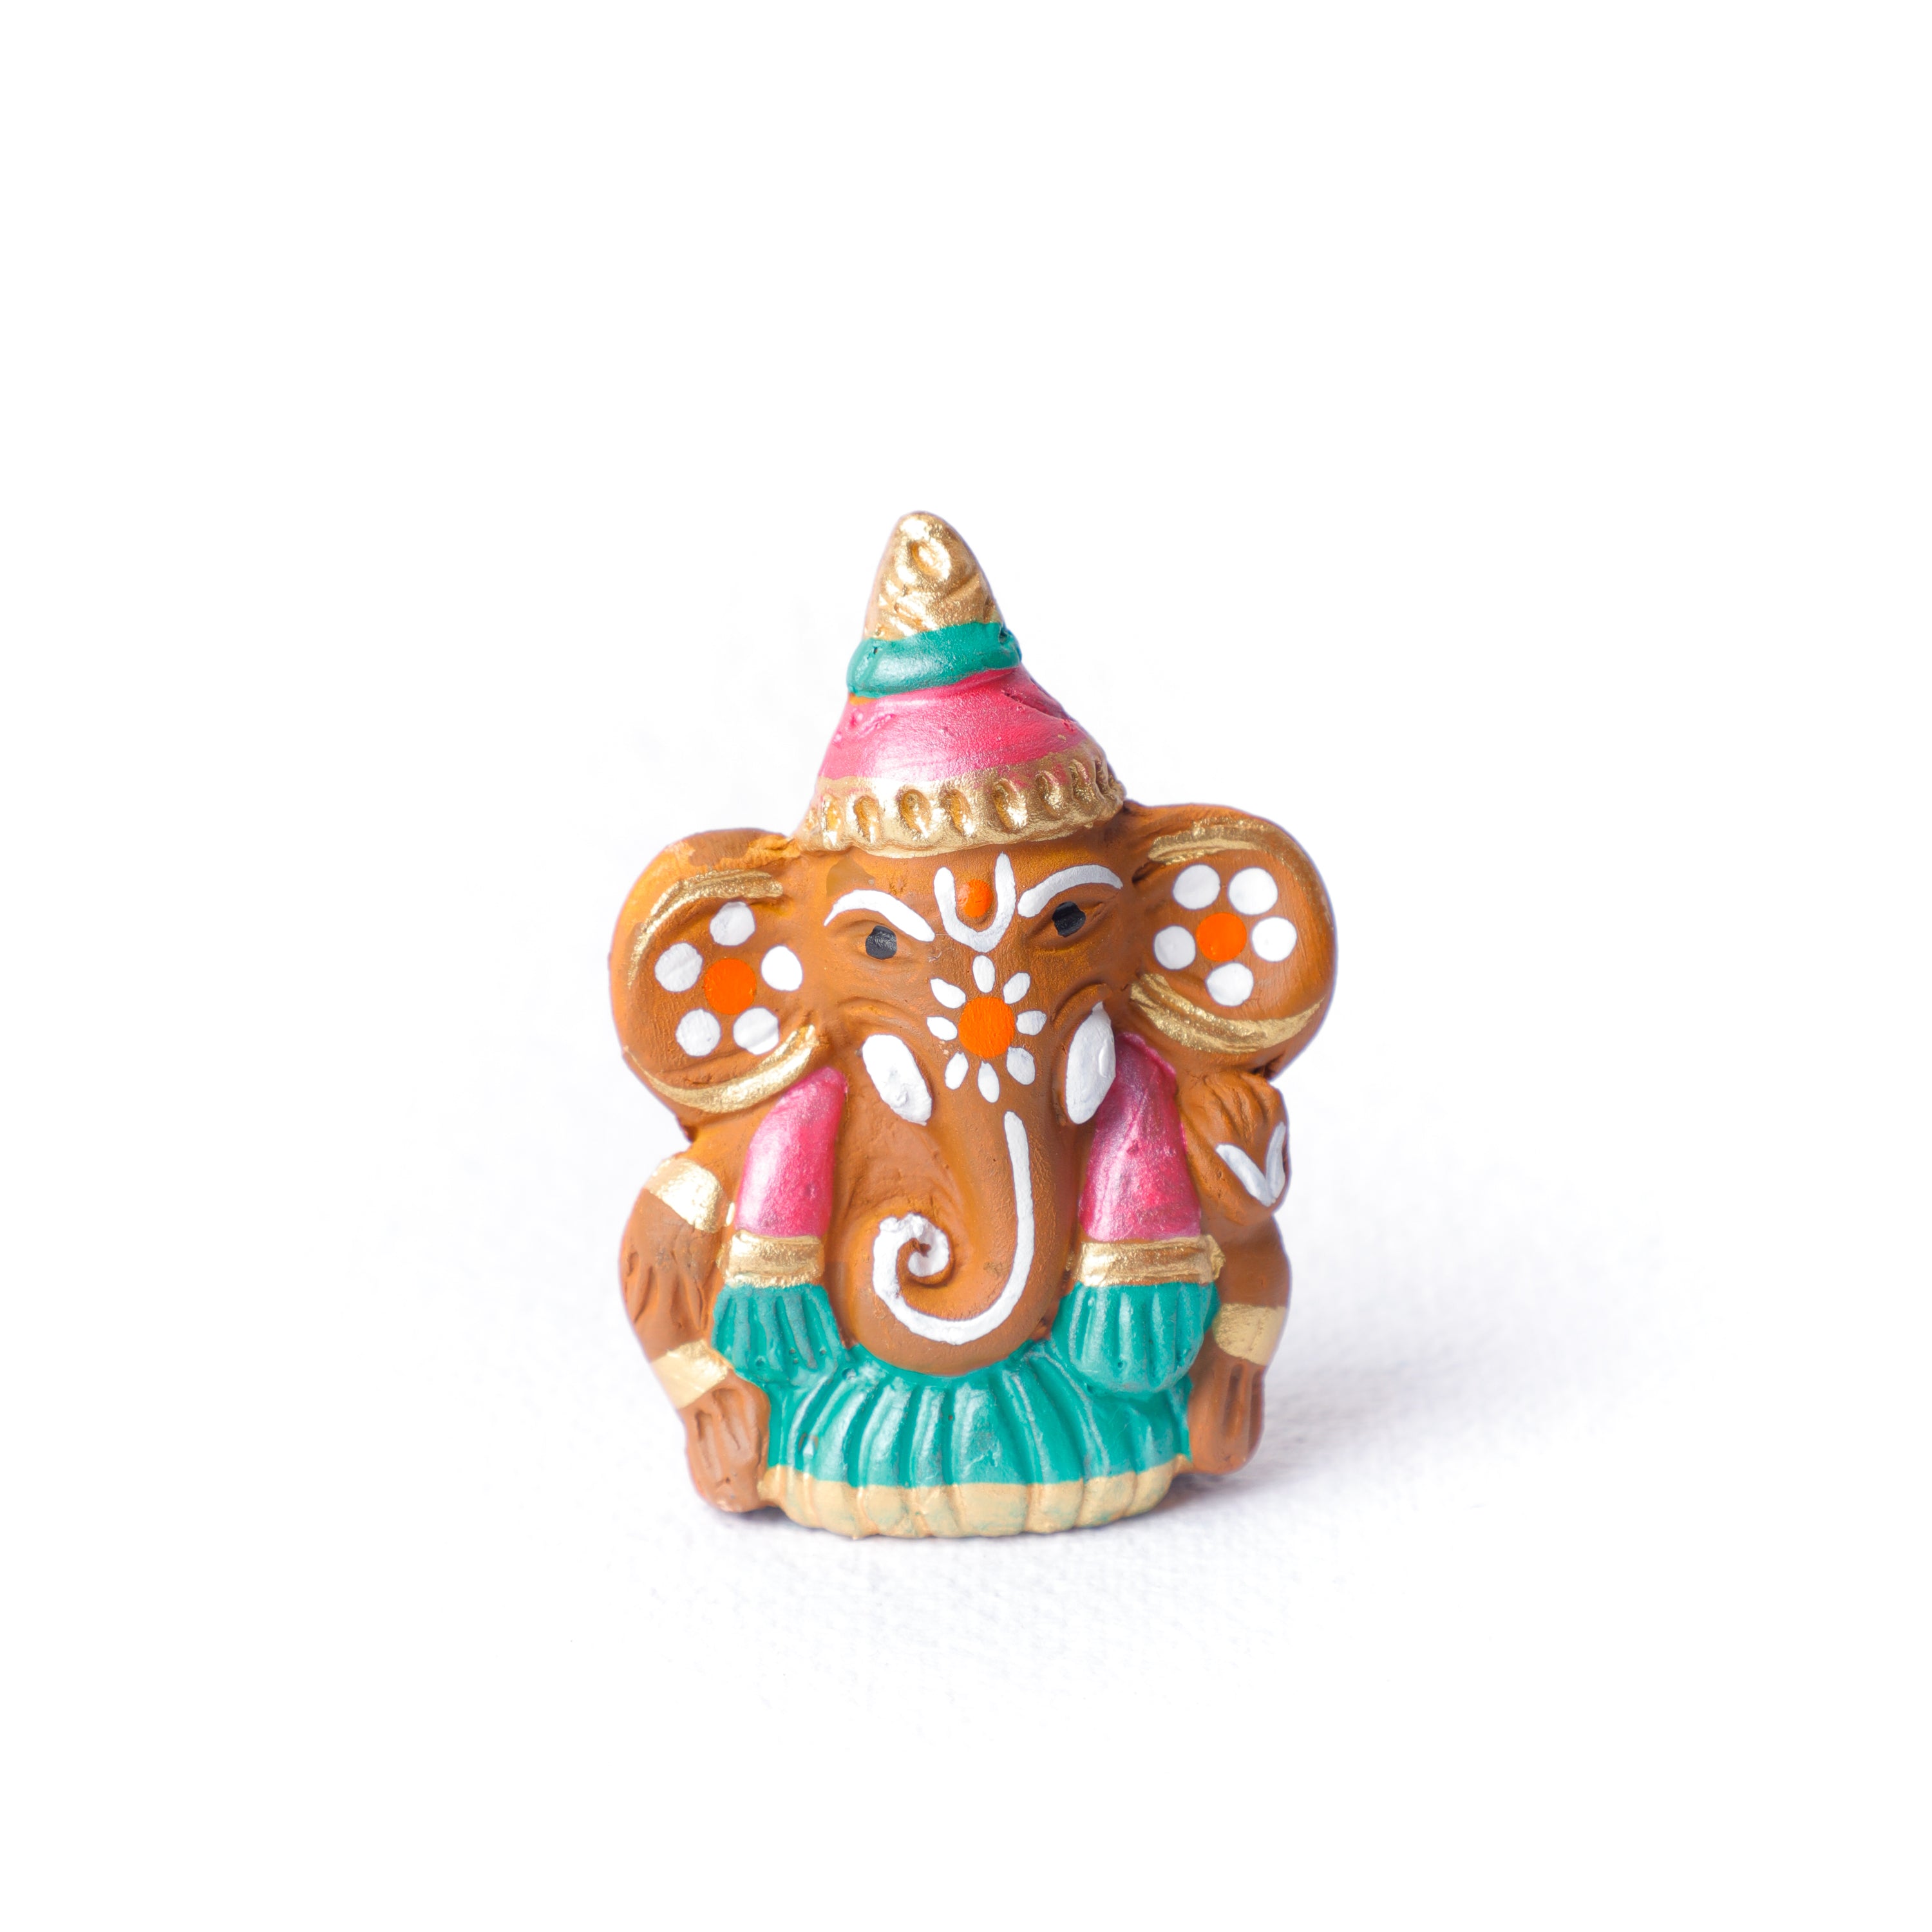 Handcrafted Terracotta Ganesh Murti Idol for Home Decor